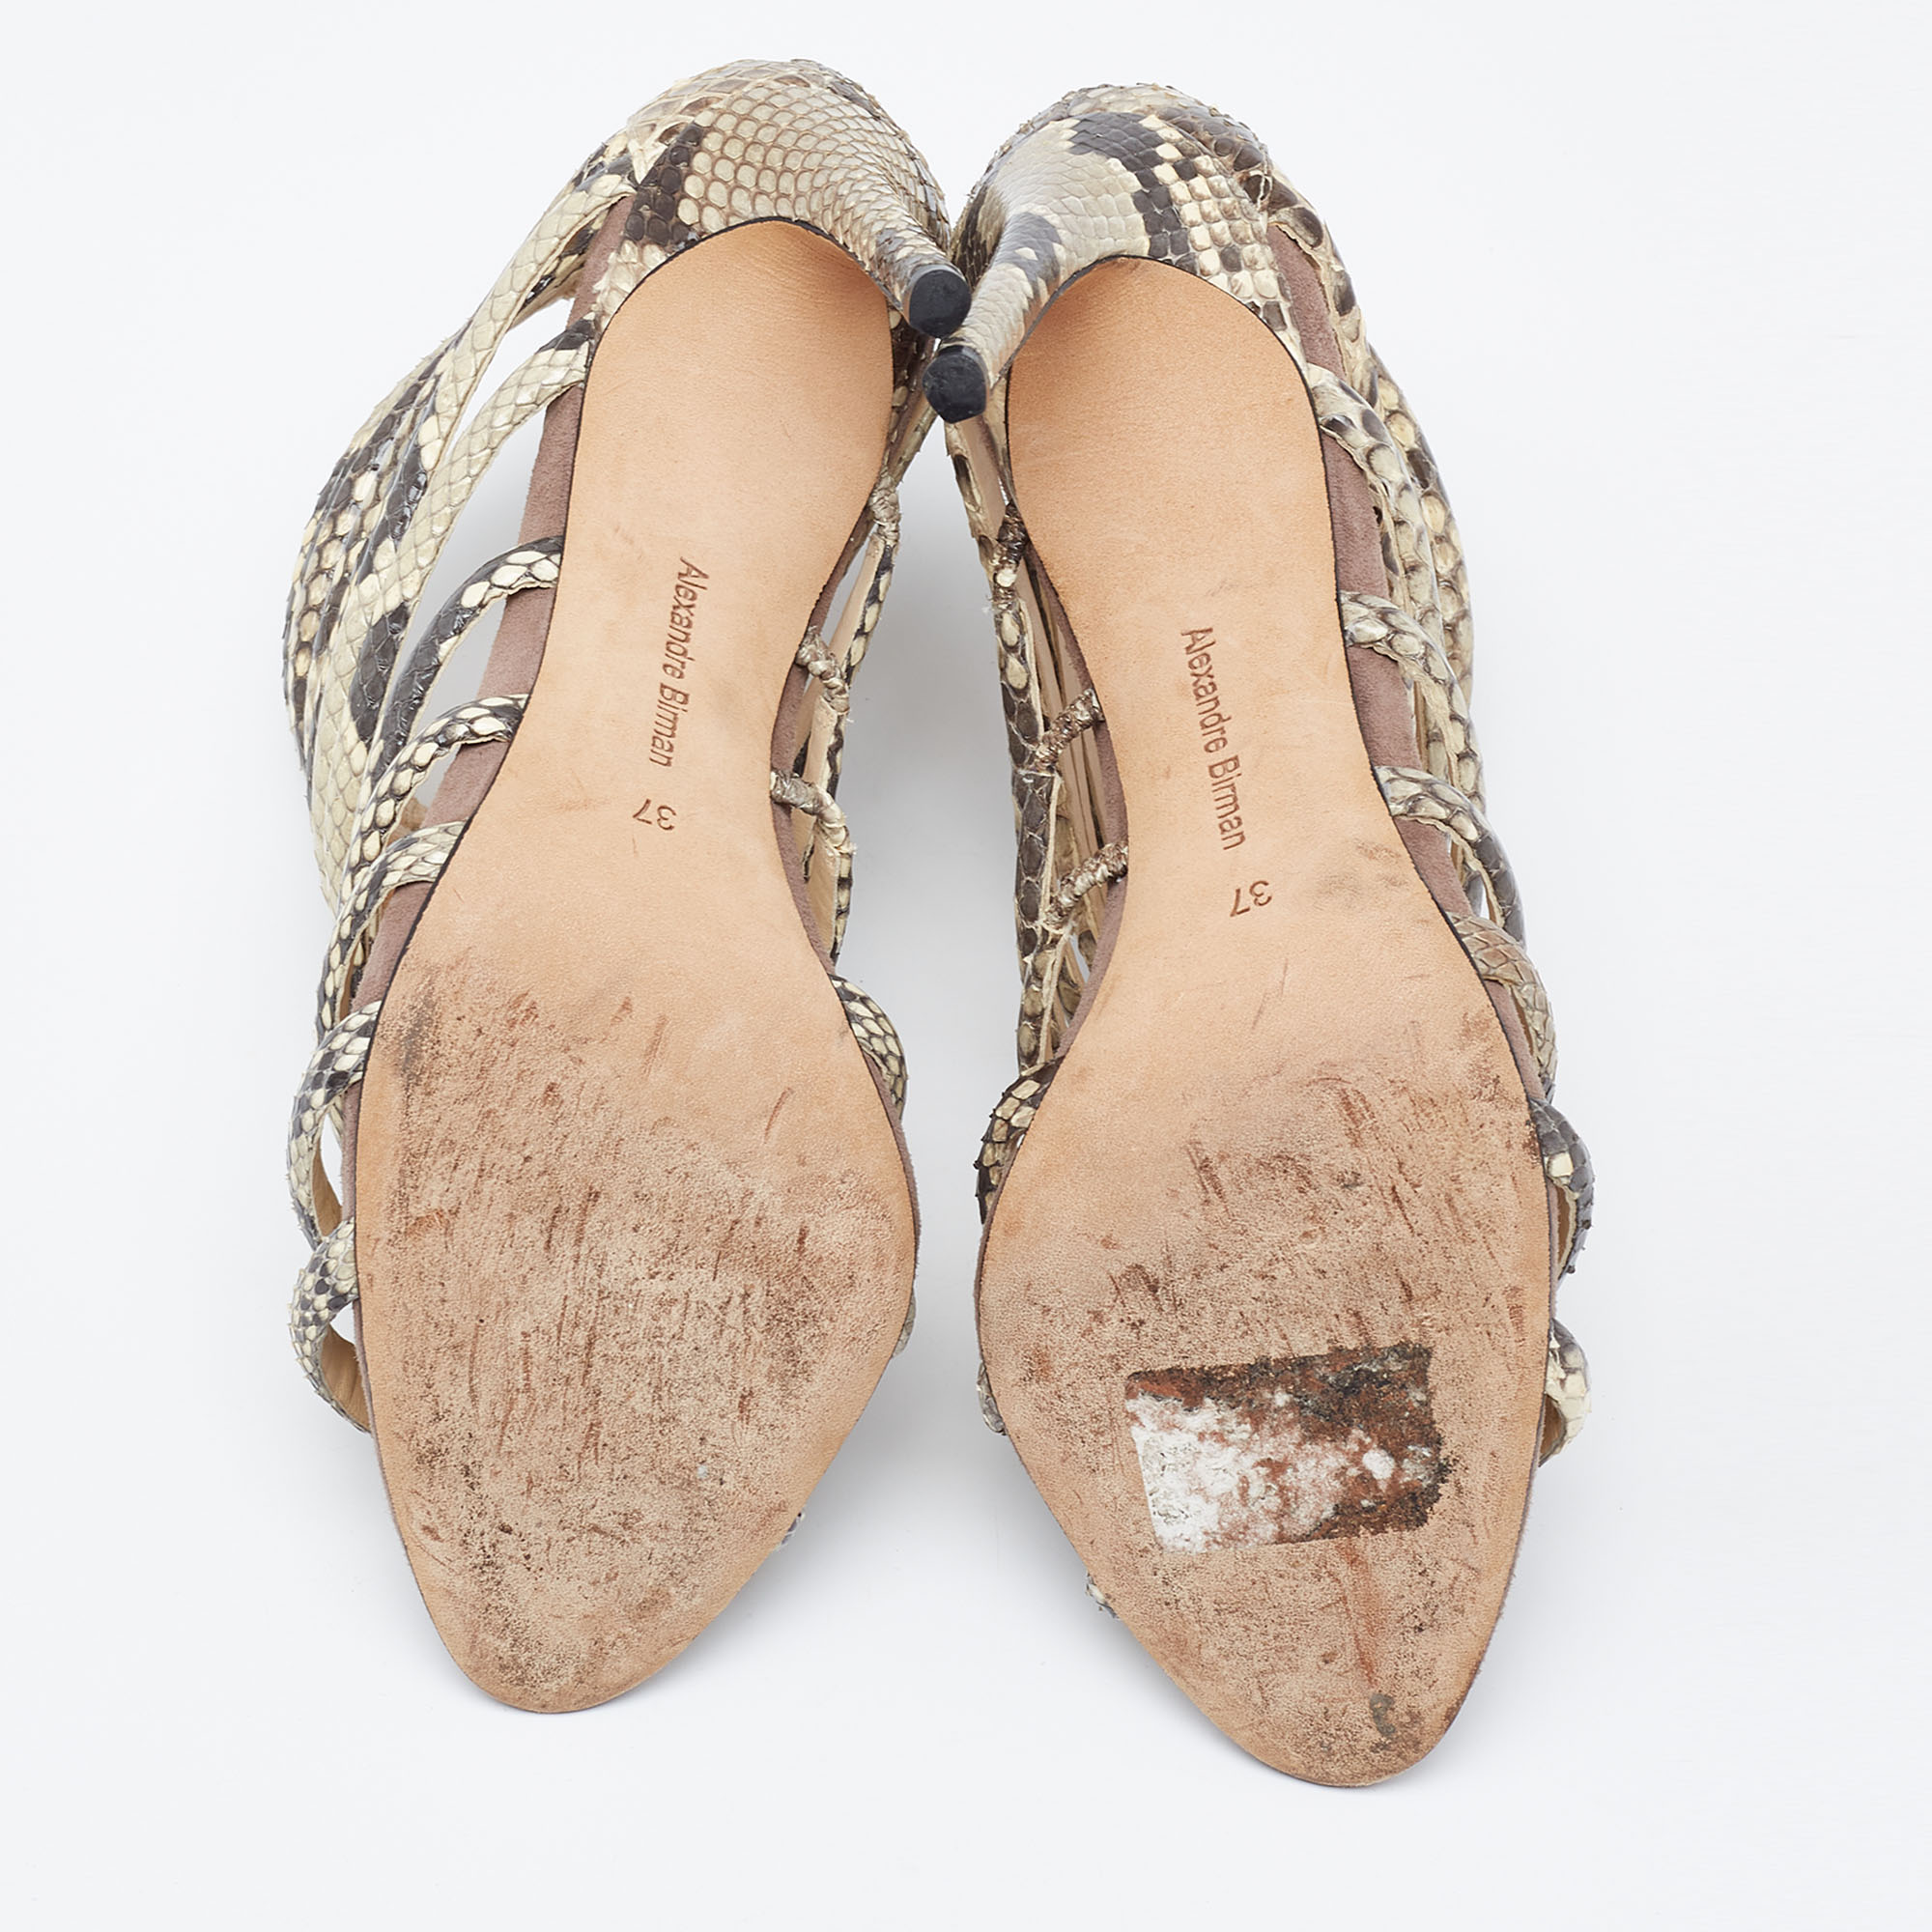 Alexandre Birman Brown/Beige Python Embossed Leather Caged Zipper Sandals Size 37